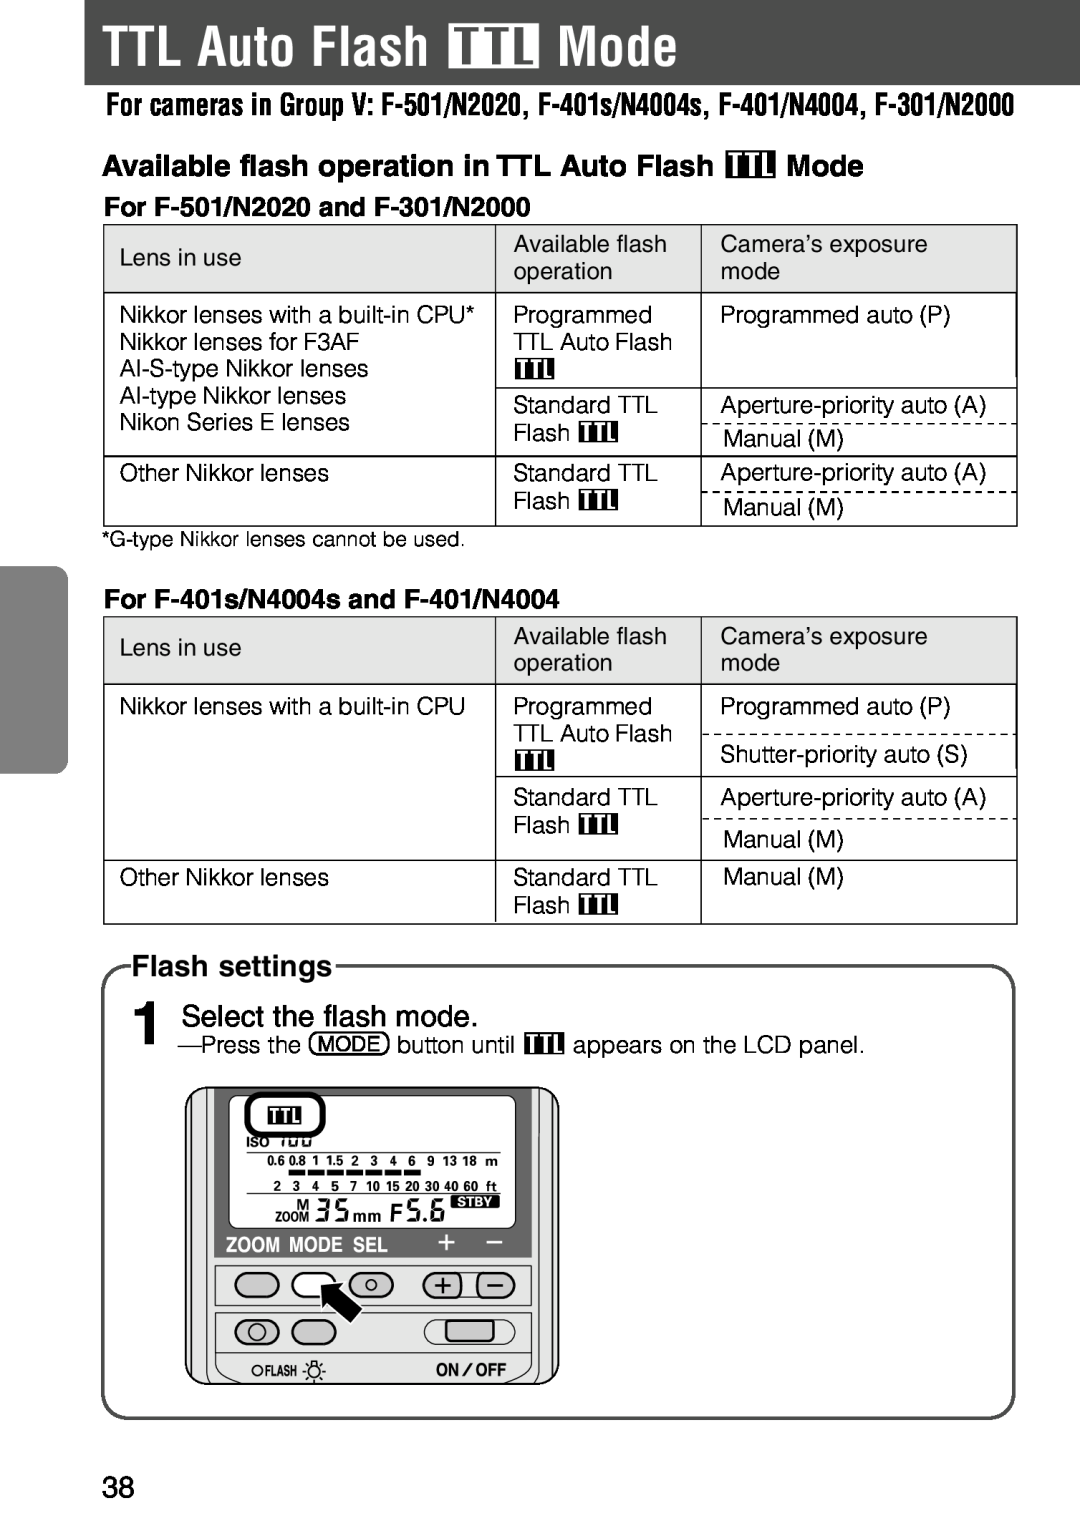 Nikon SB-28 instruction manual TTL Auto Flash t Mode, Flash settings, Select the flash mode, For F-501/N2020and F-301/N2000 